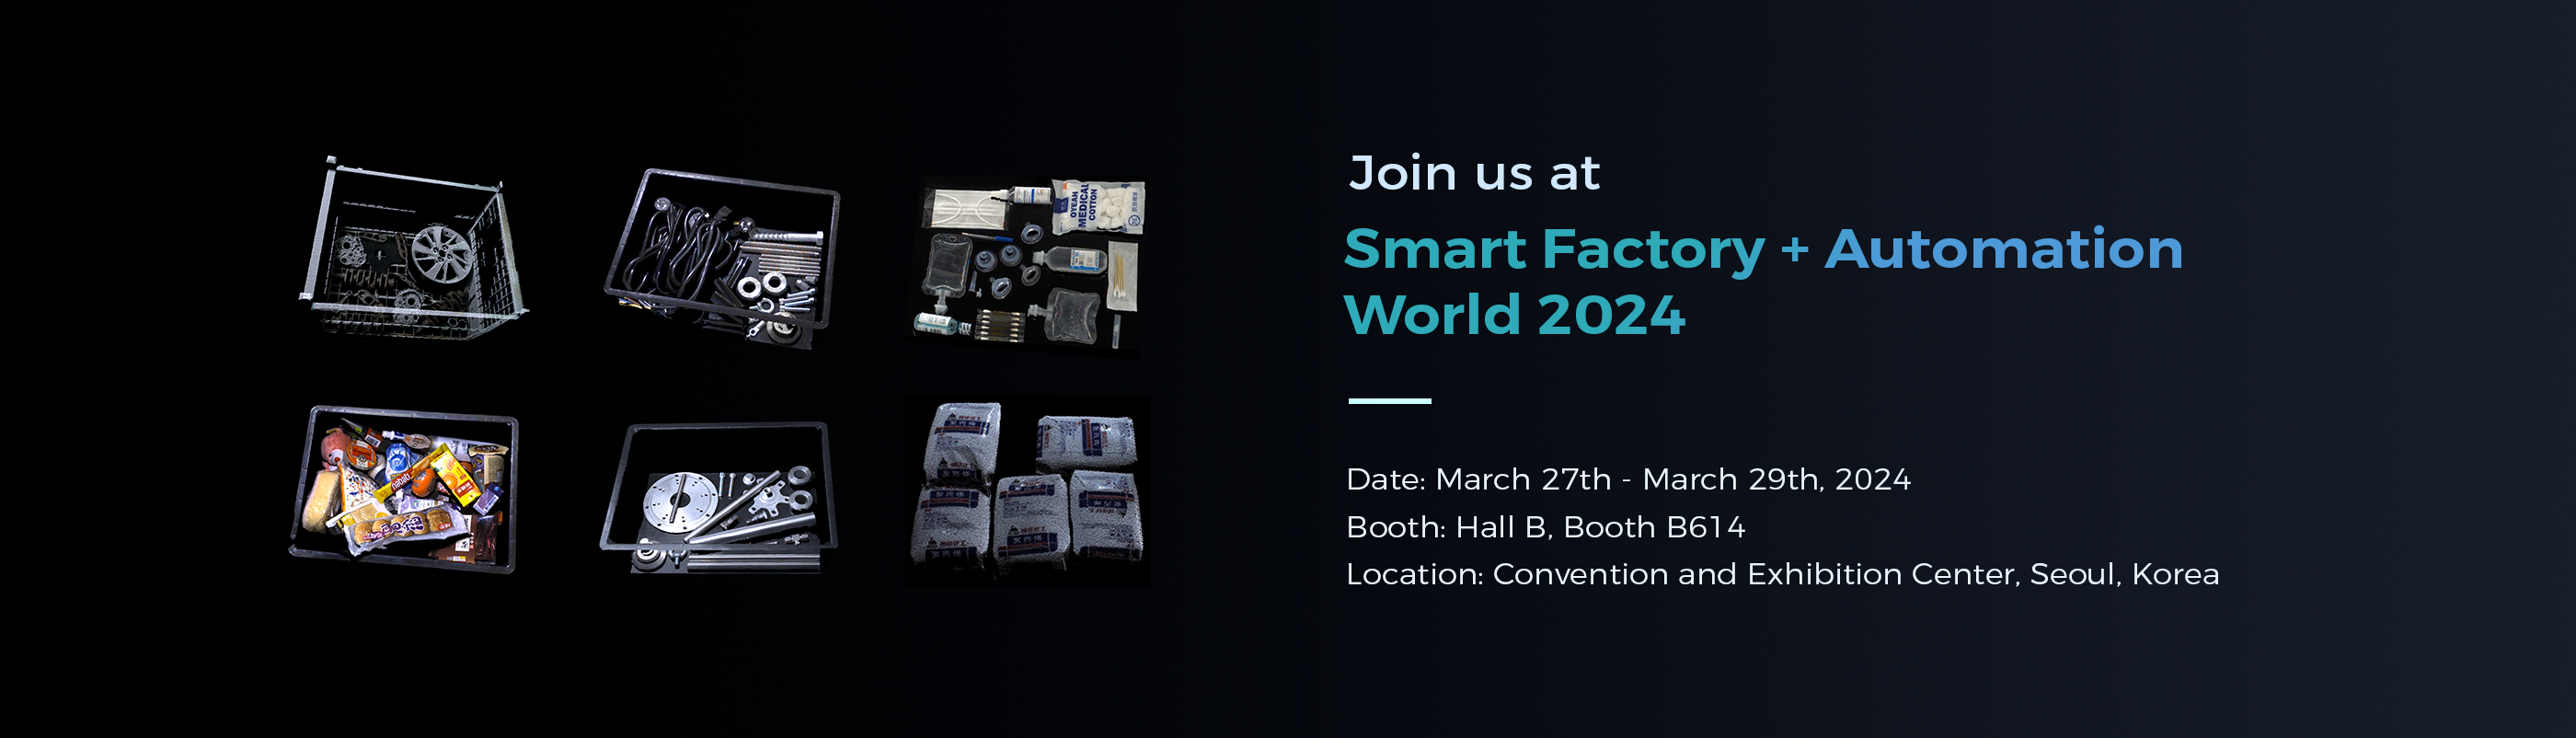 smart factory + automation world 2024